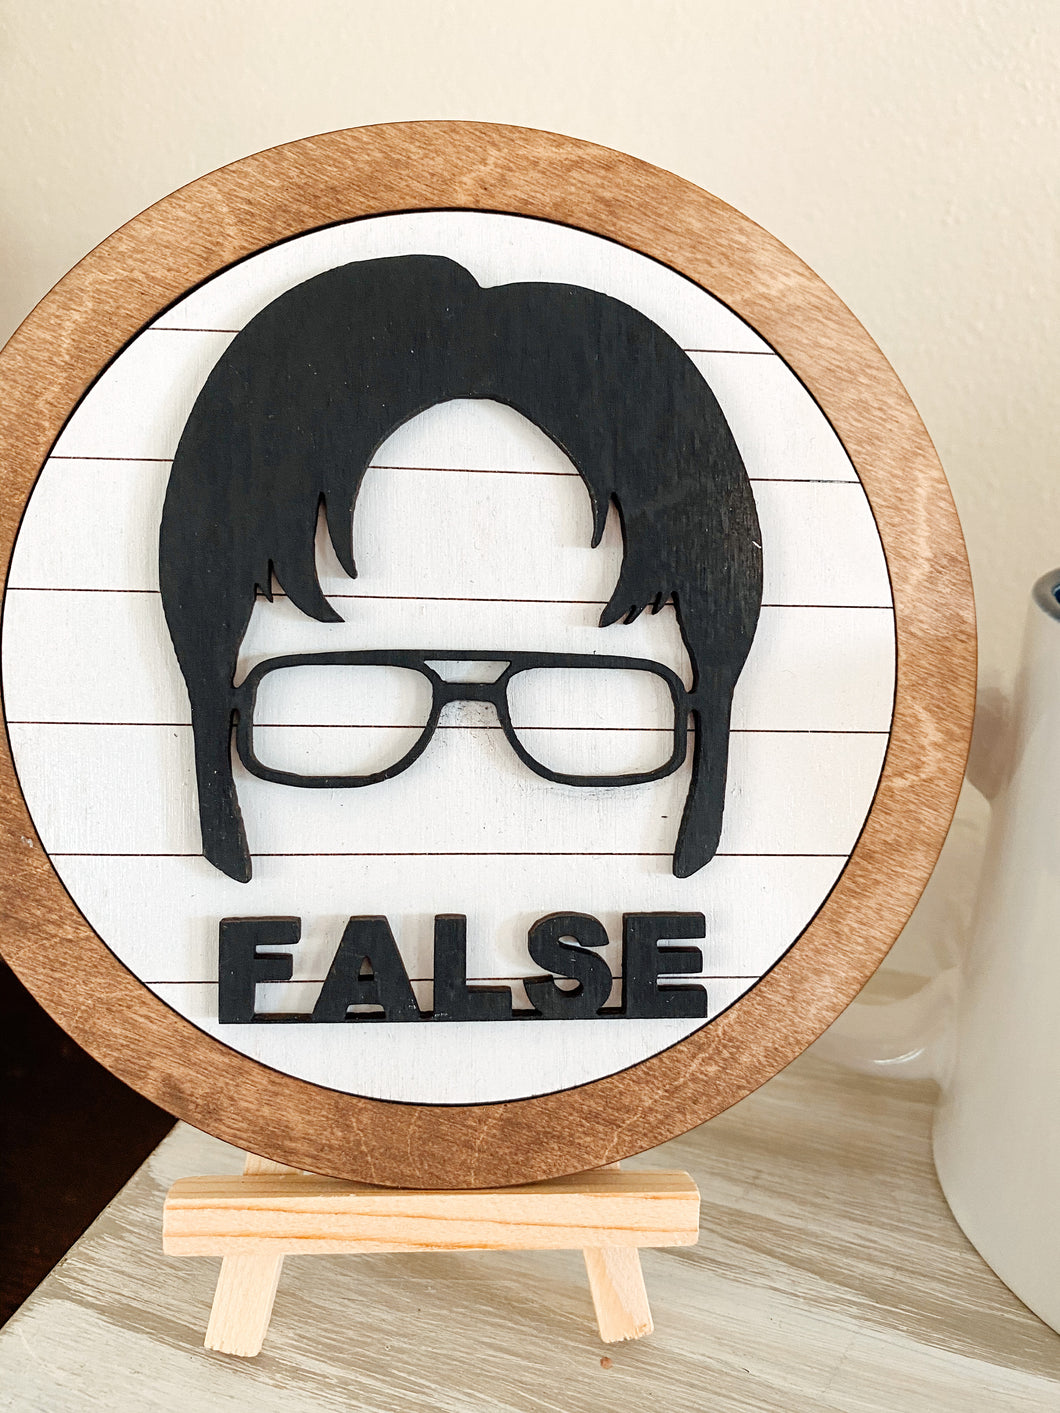 Dwight “False” Interchangeable Frame